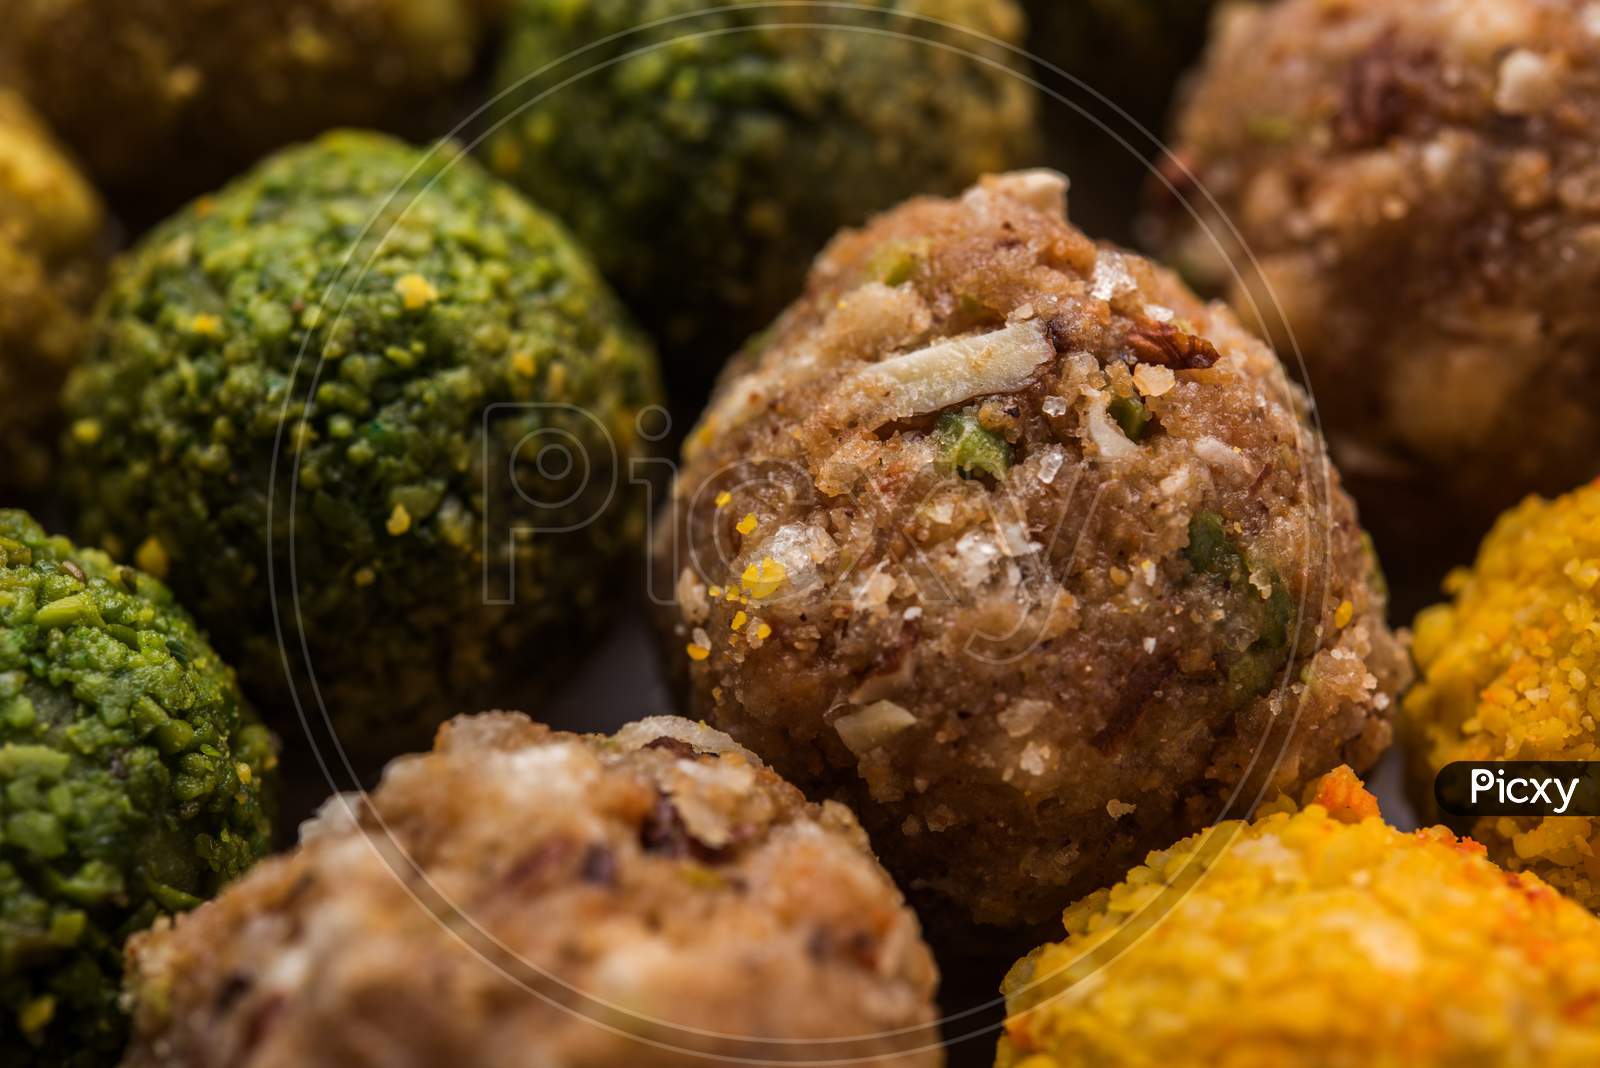 Energy Ladoo/ balls, dry fruit laddu or mithai